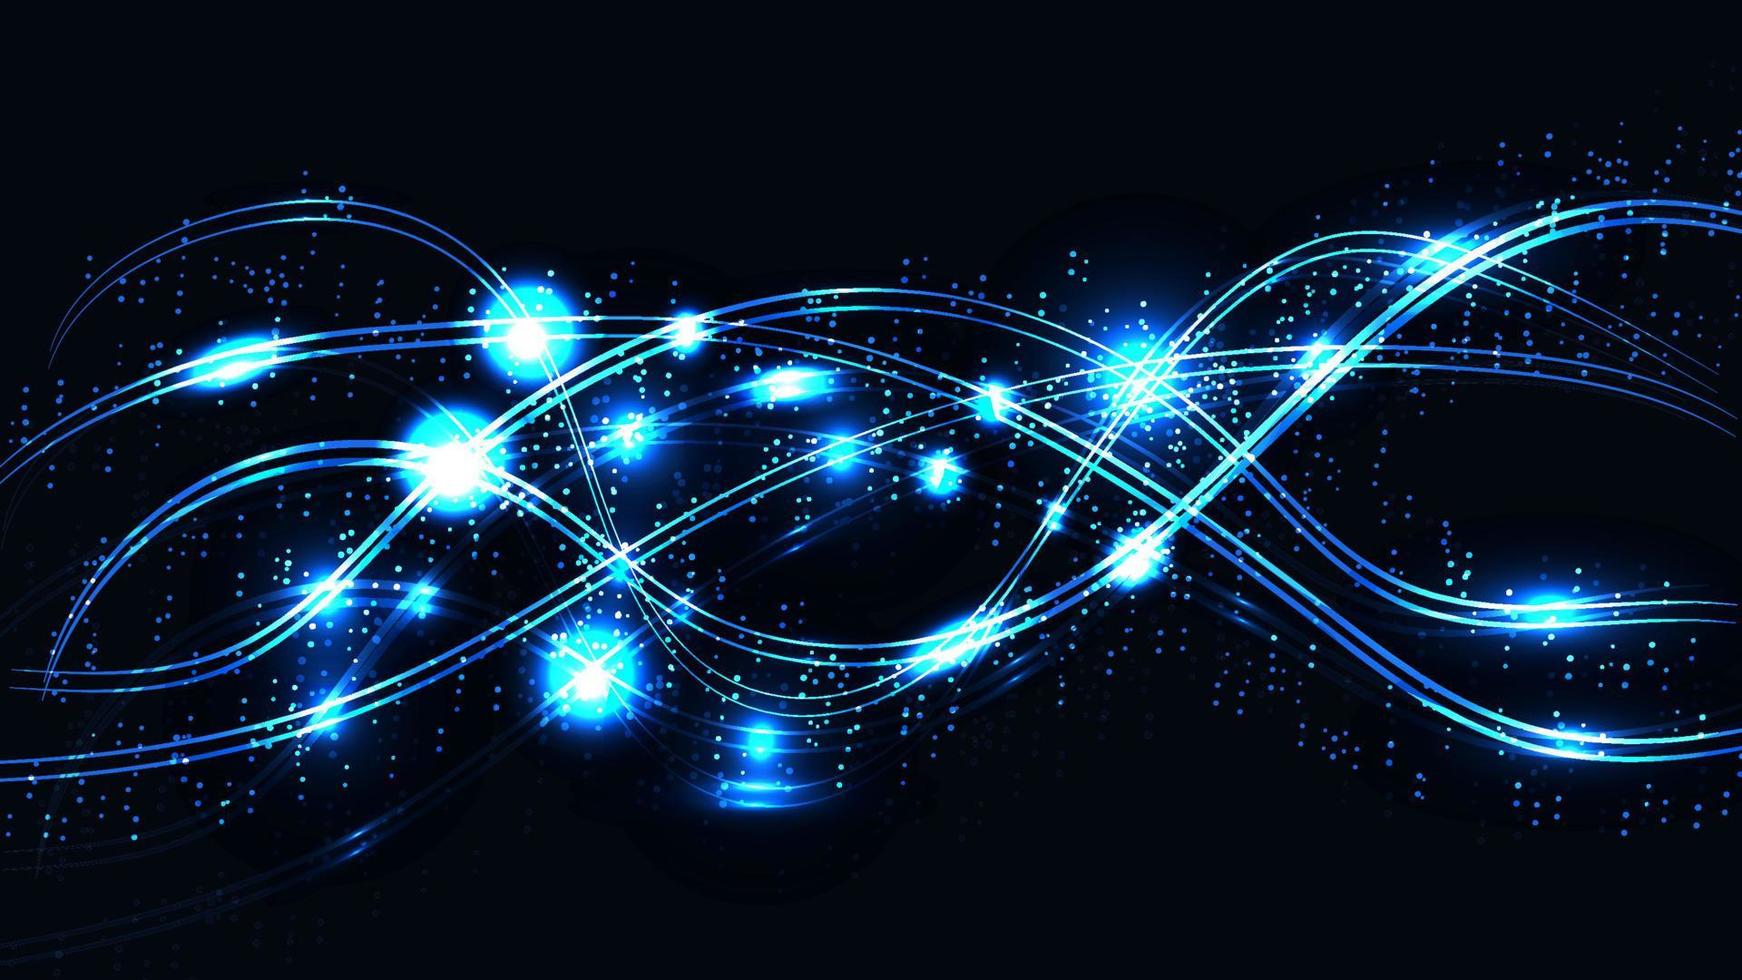 abstracto azul hermoso digital moderno mágico brillante energía eléctrica láser neón textura con líneas y ondas rayas, fondo vector